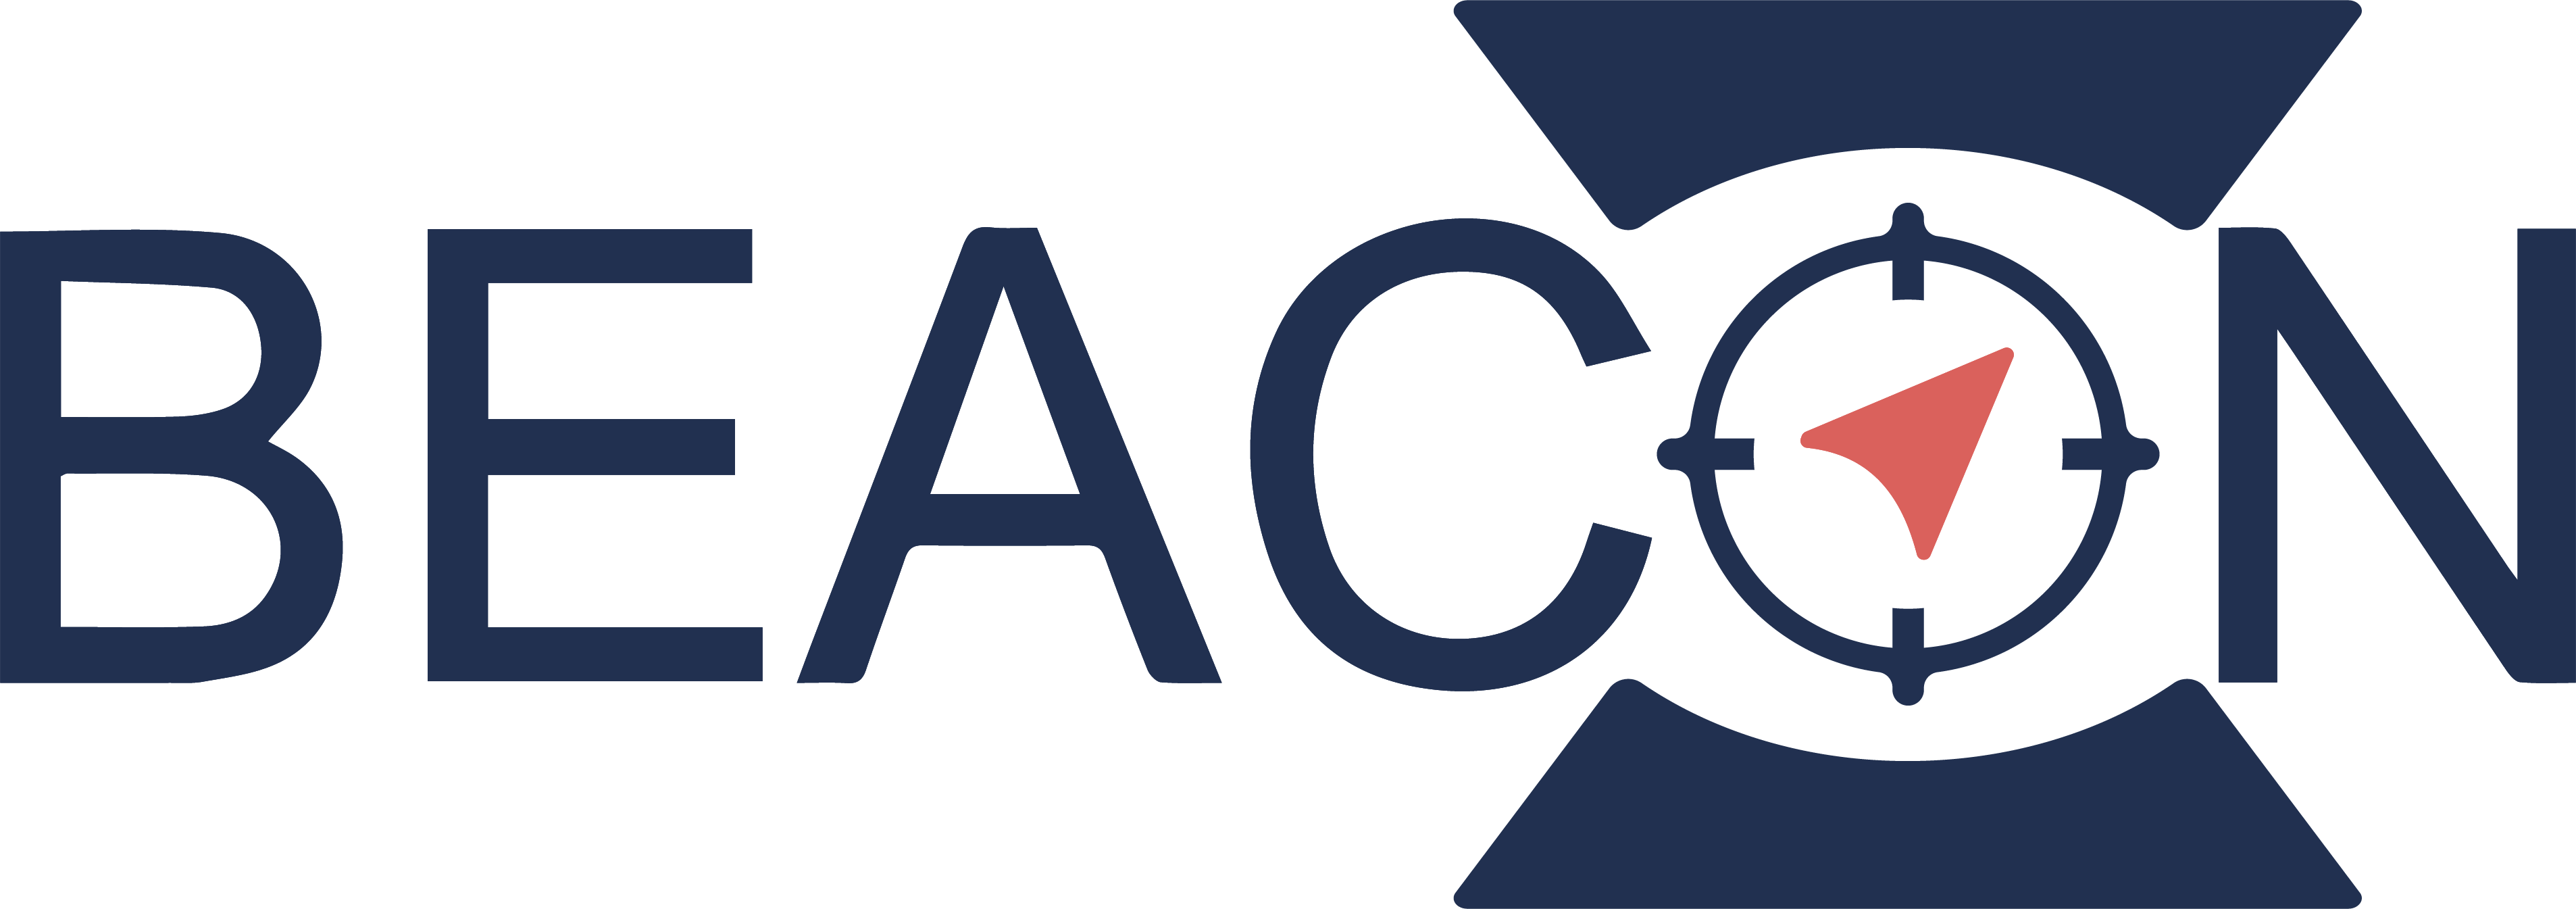 Beacon Logotype